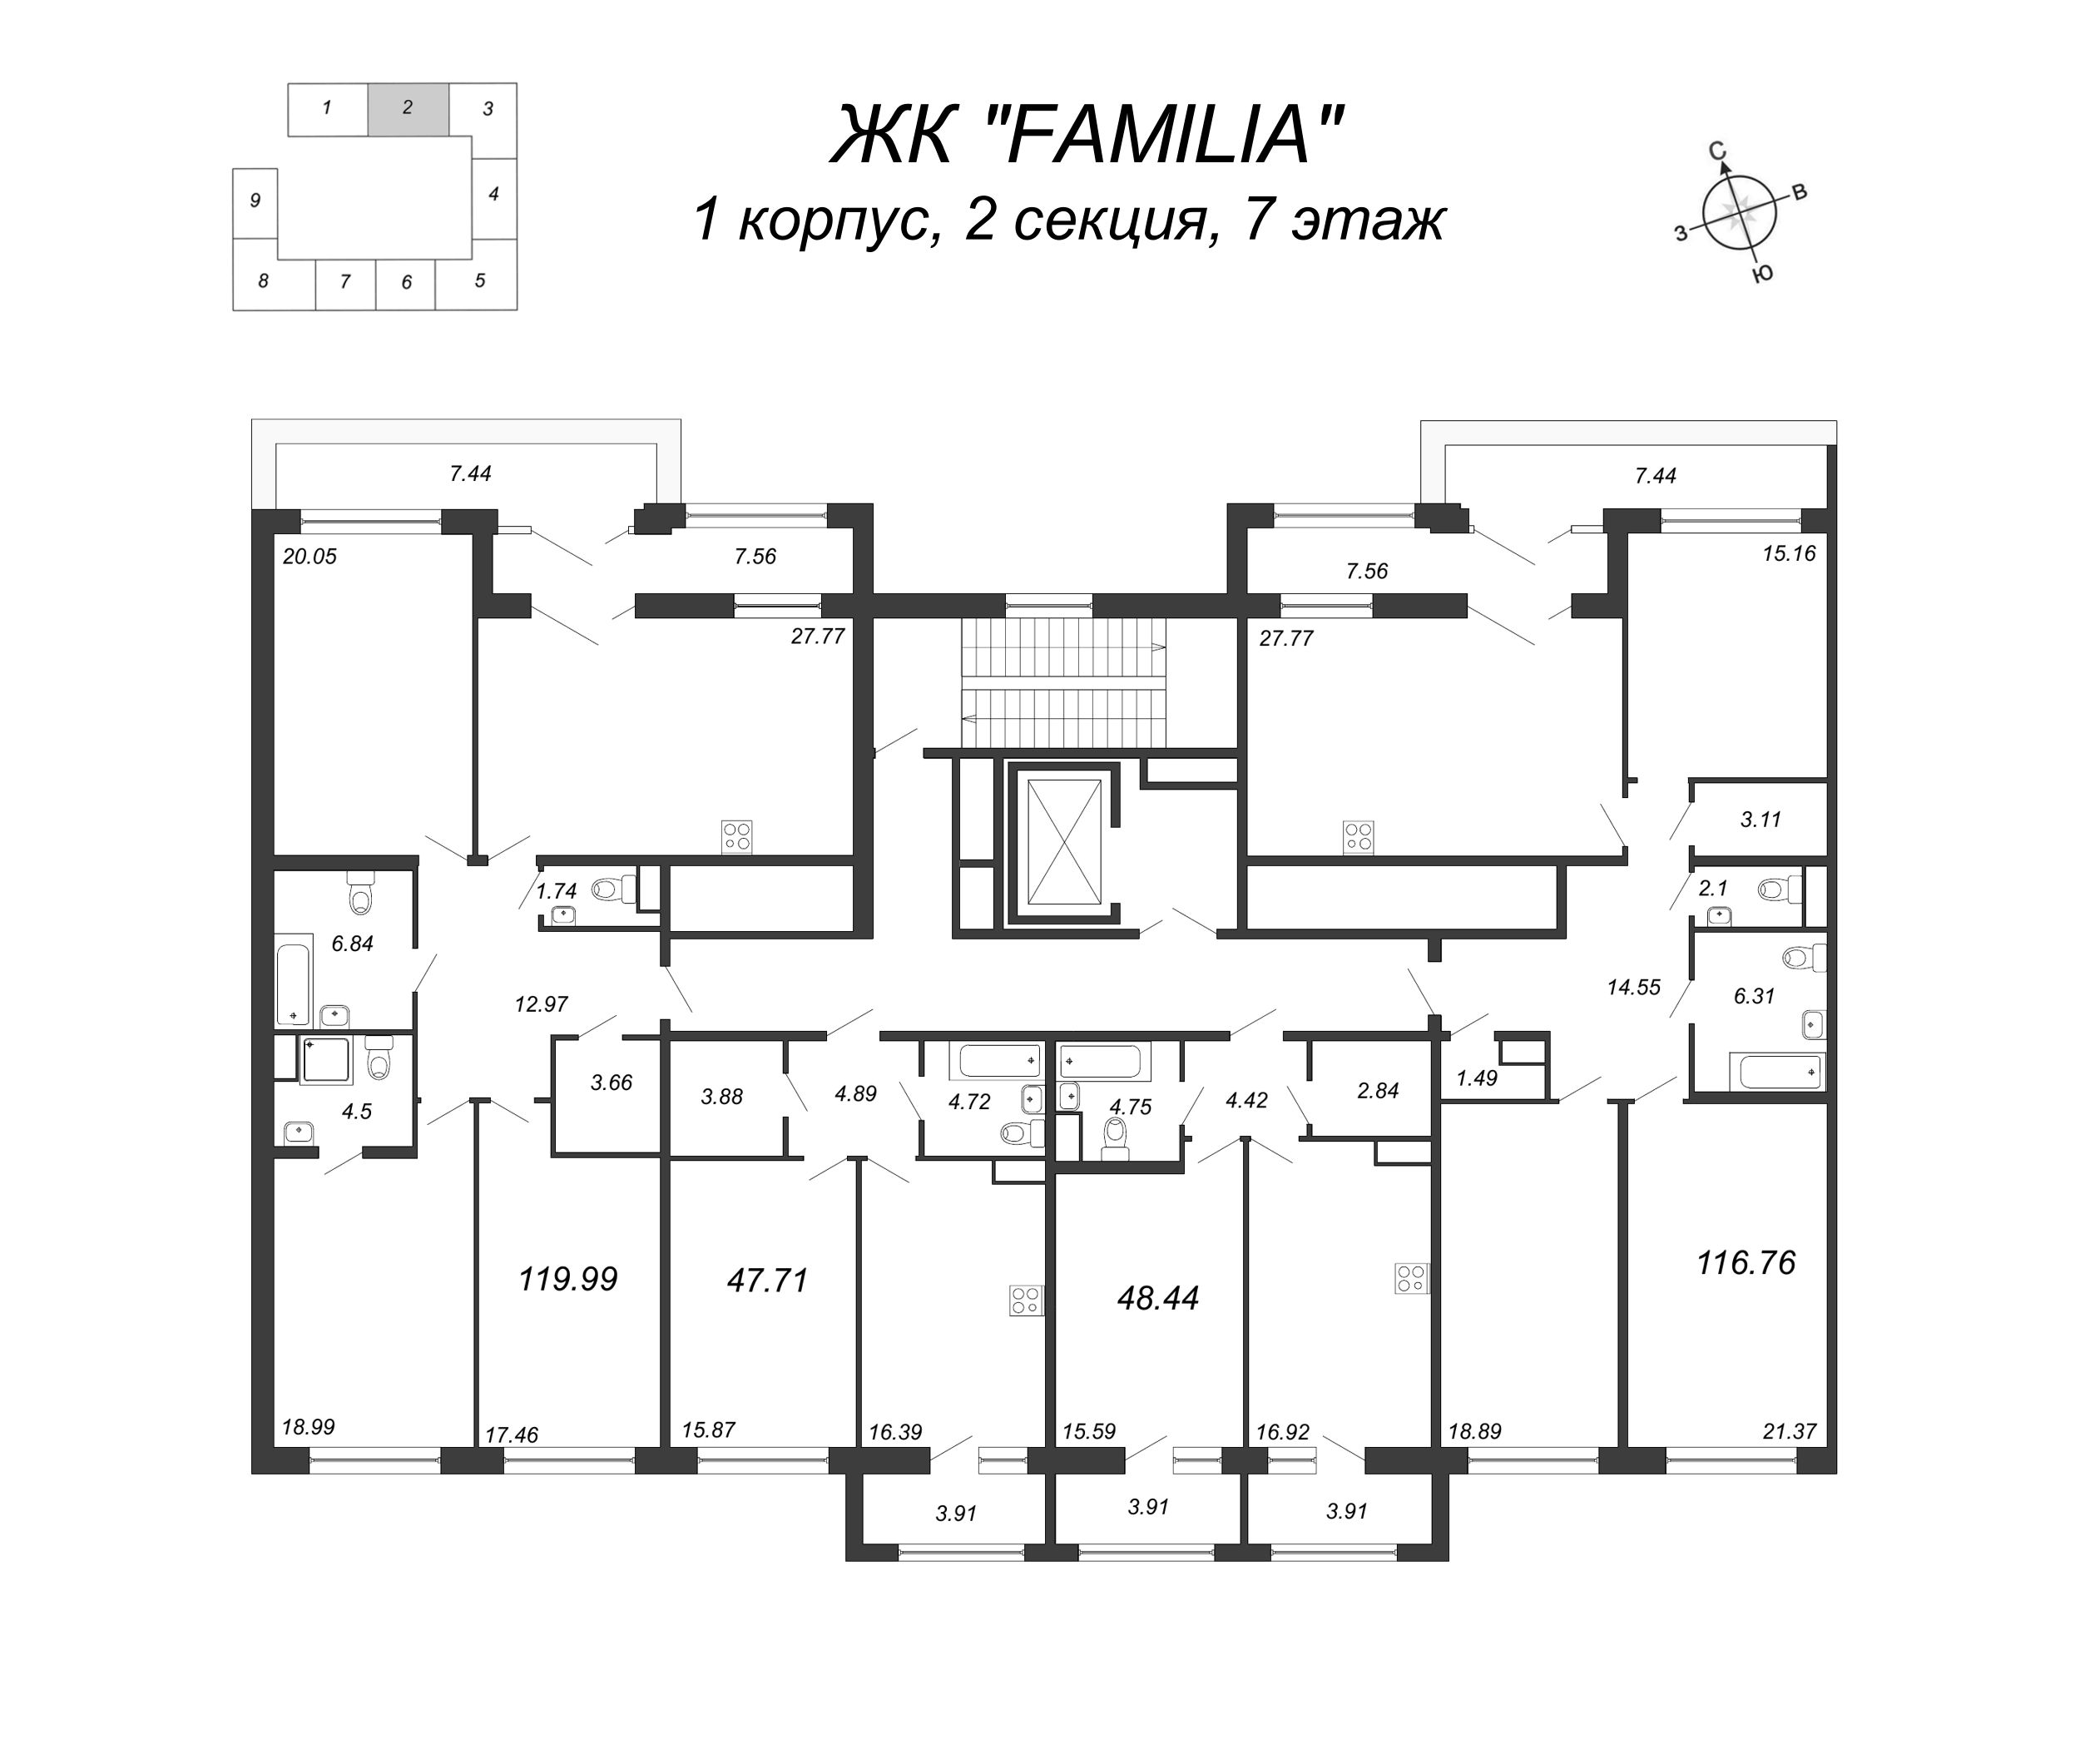 4-комнатная (Евро) квартира, 117.4 м² в ЖК "FAMILIA" - планировка этажа